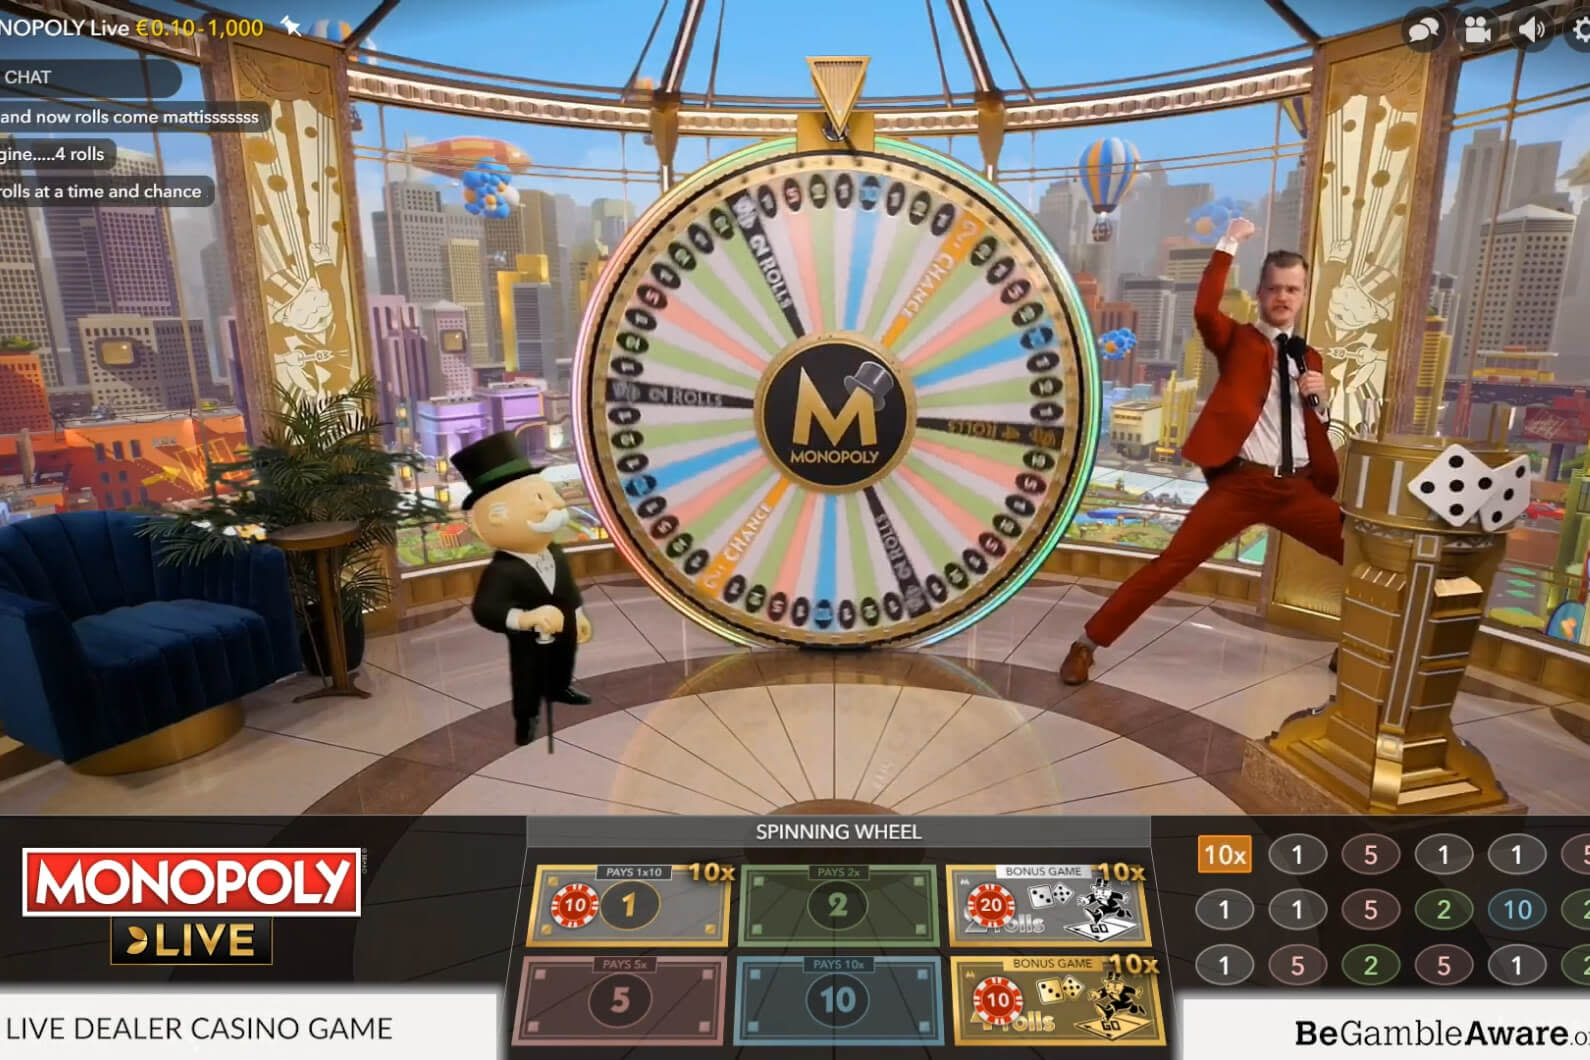 Monopoly live - Min max bets screenshot